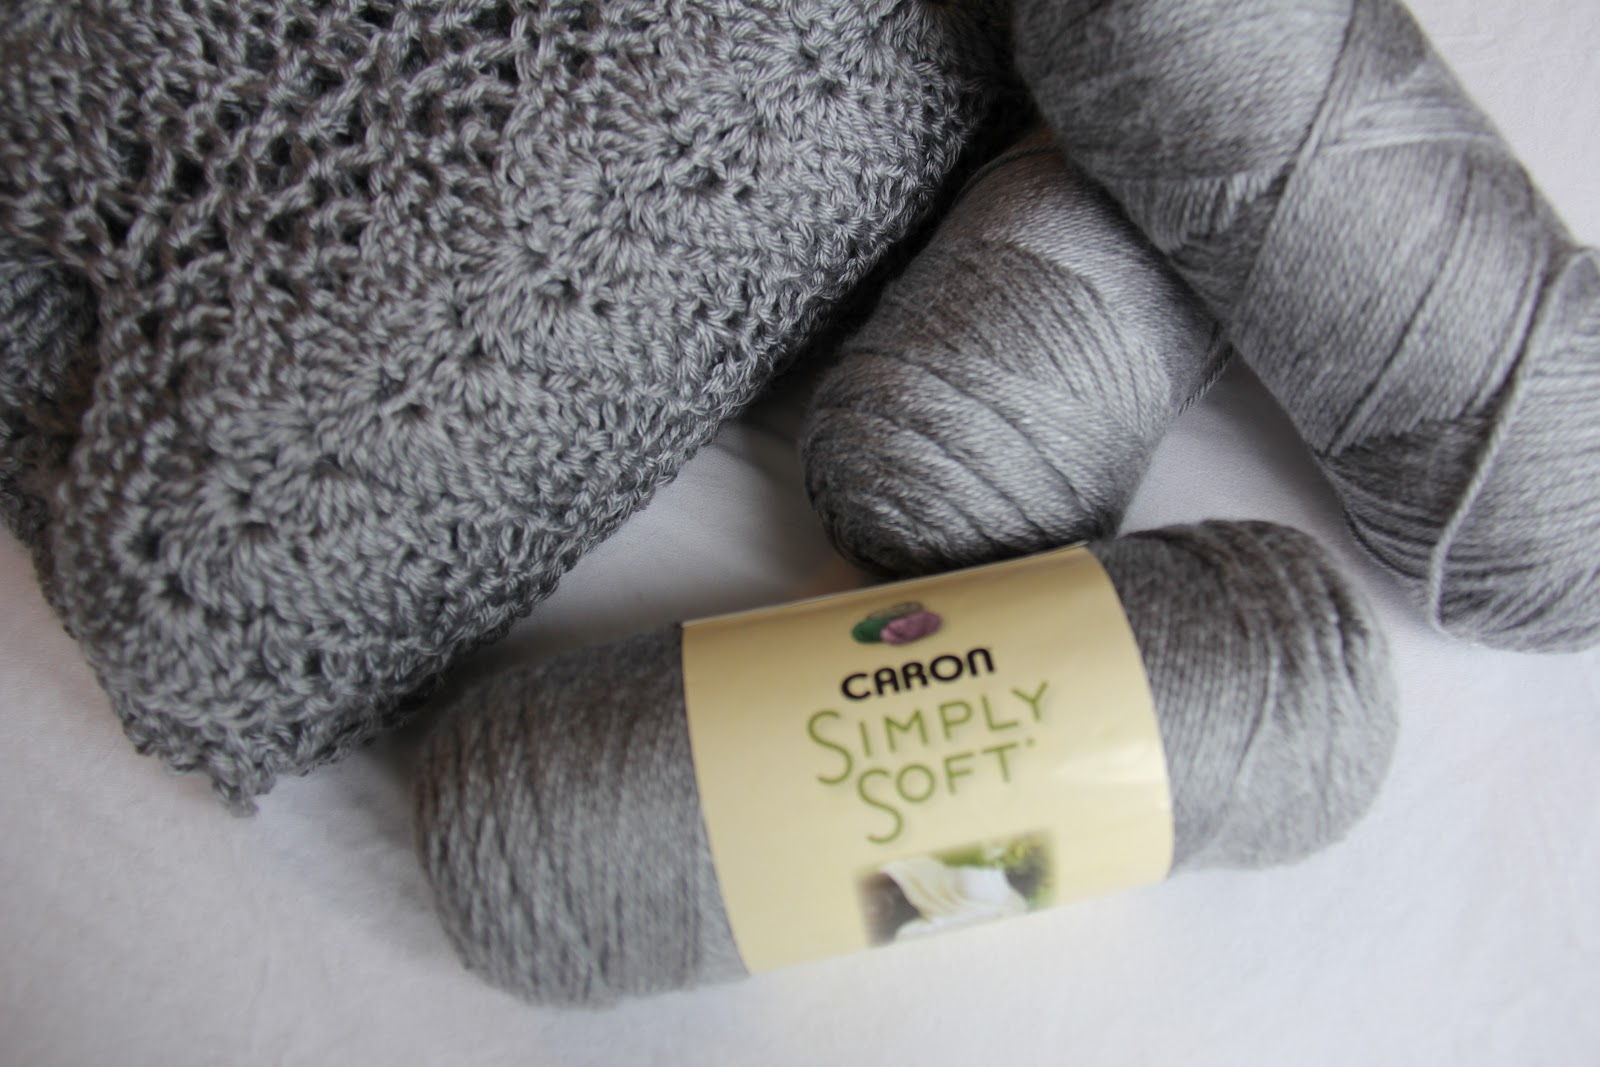 Caron Simply Soft Crochet Patterns Free Crochet Patterns Using Caron Simply Soft Yarn Pakbit For